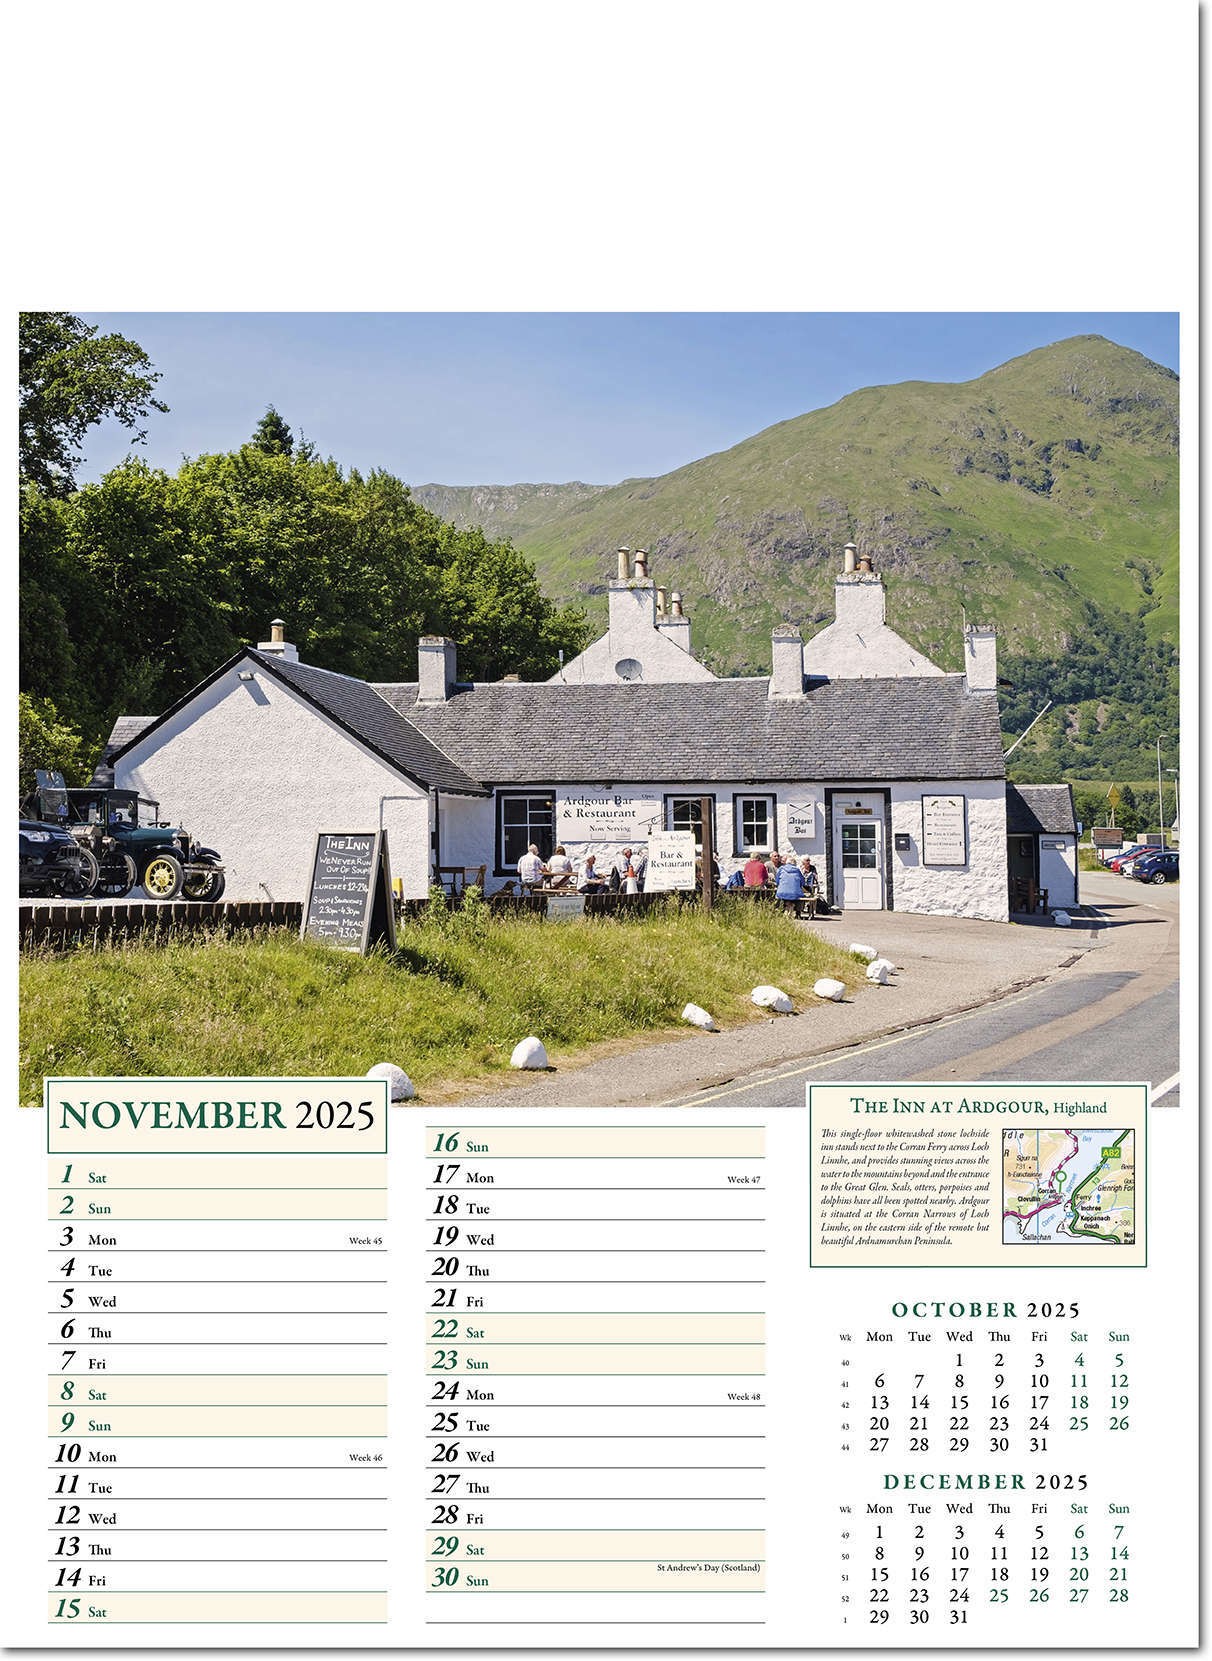 Olde Worlde Inns Calendar